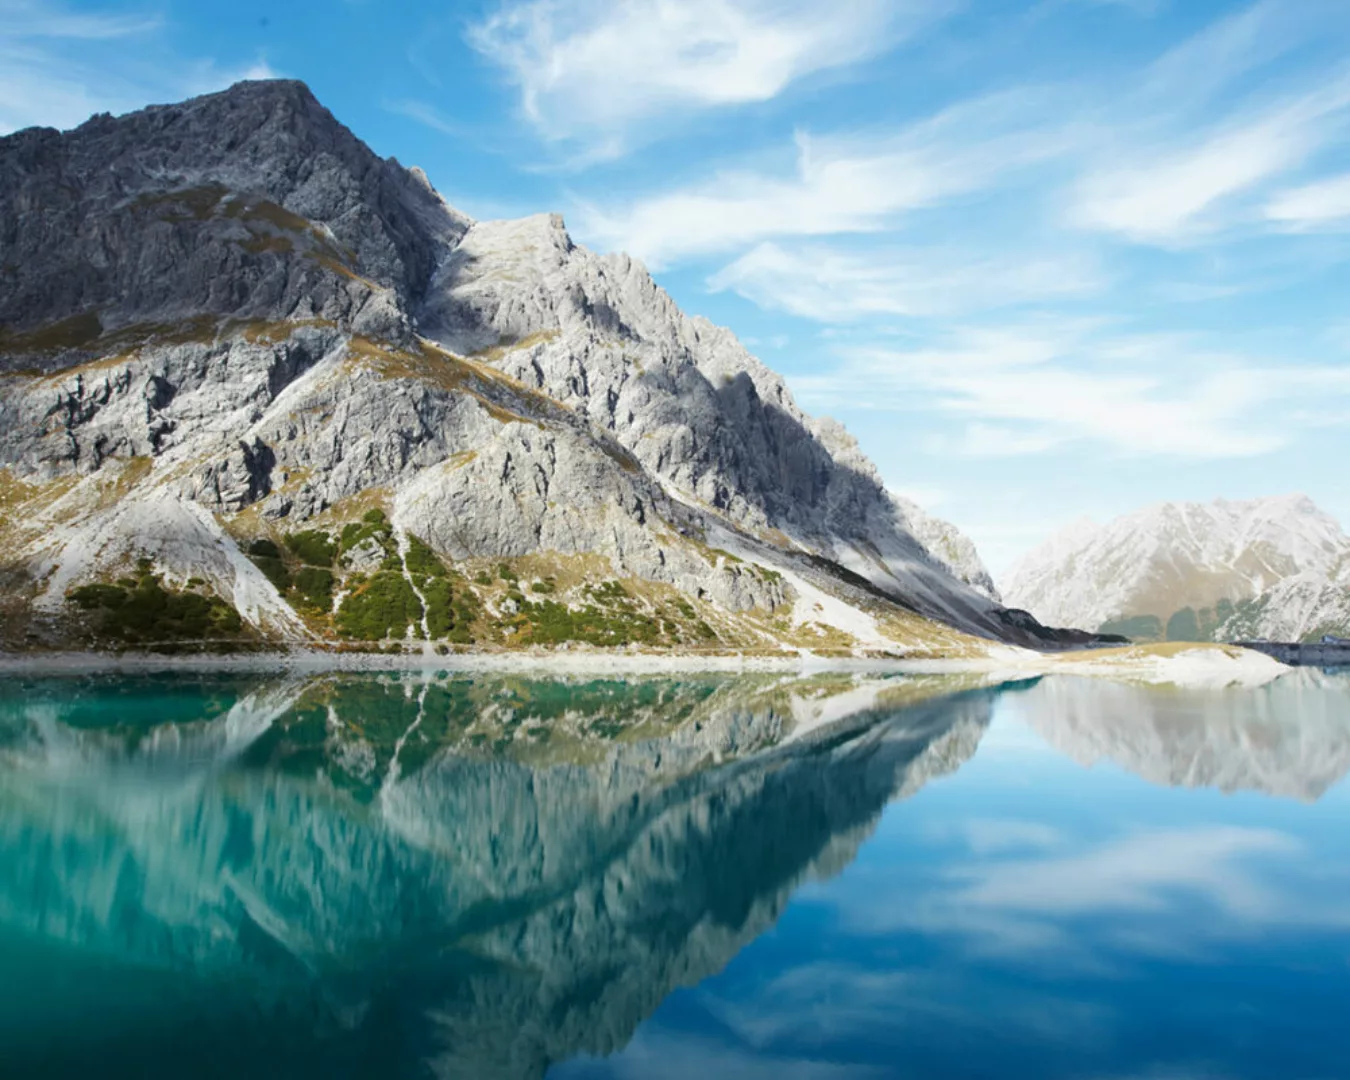 Fototapete "Bergsee klar" 4,00x2,50 m / Strukturvlies Klassik günstig online kaufen